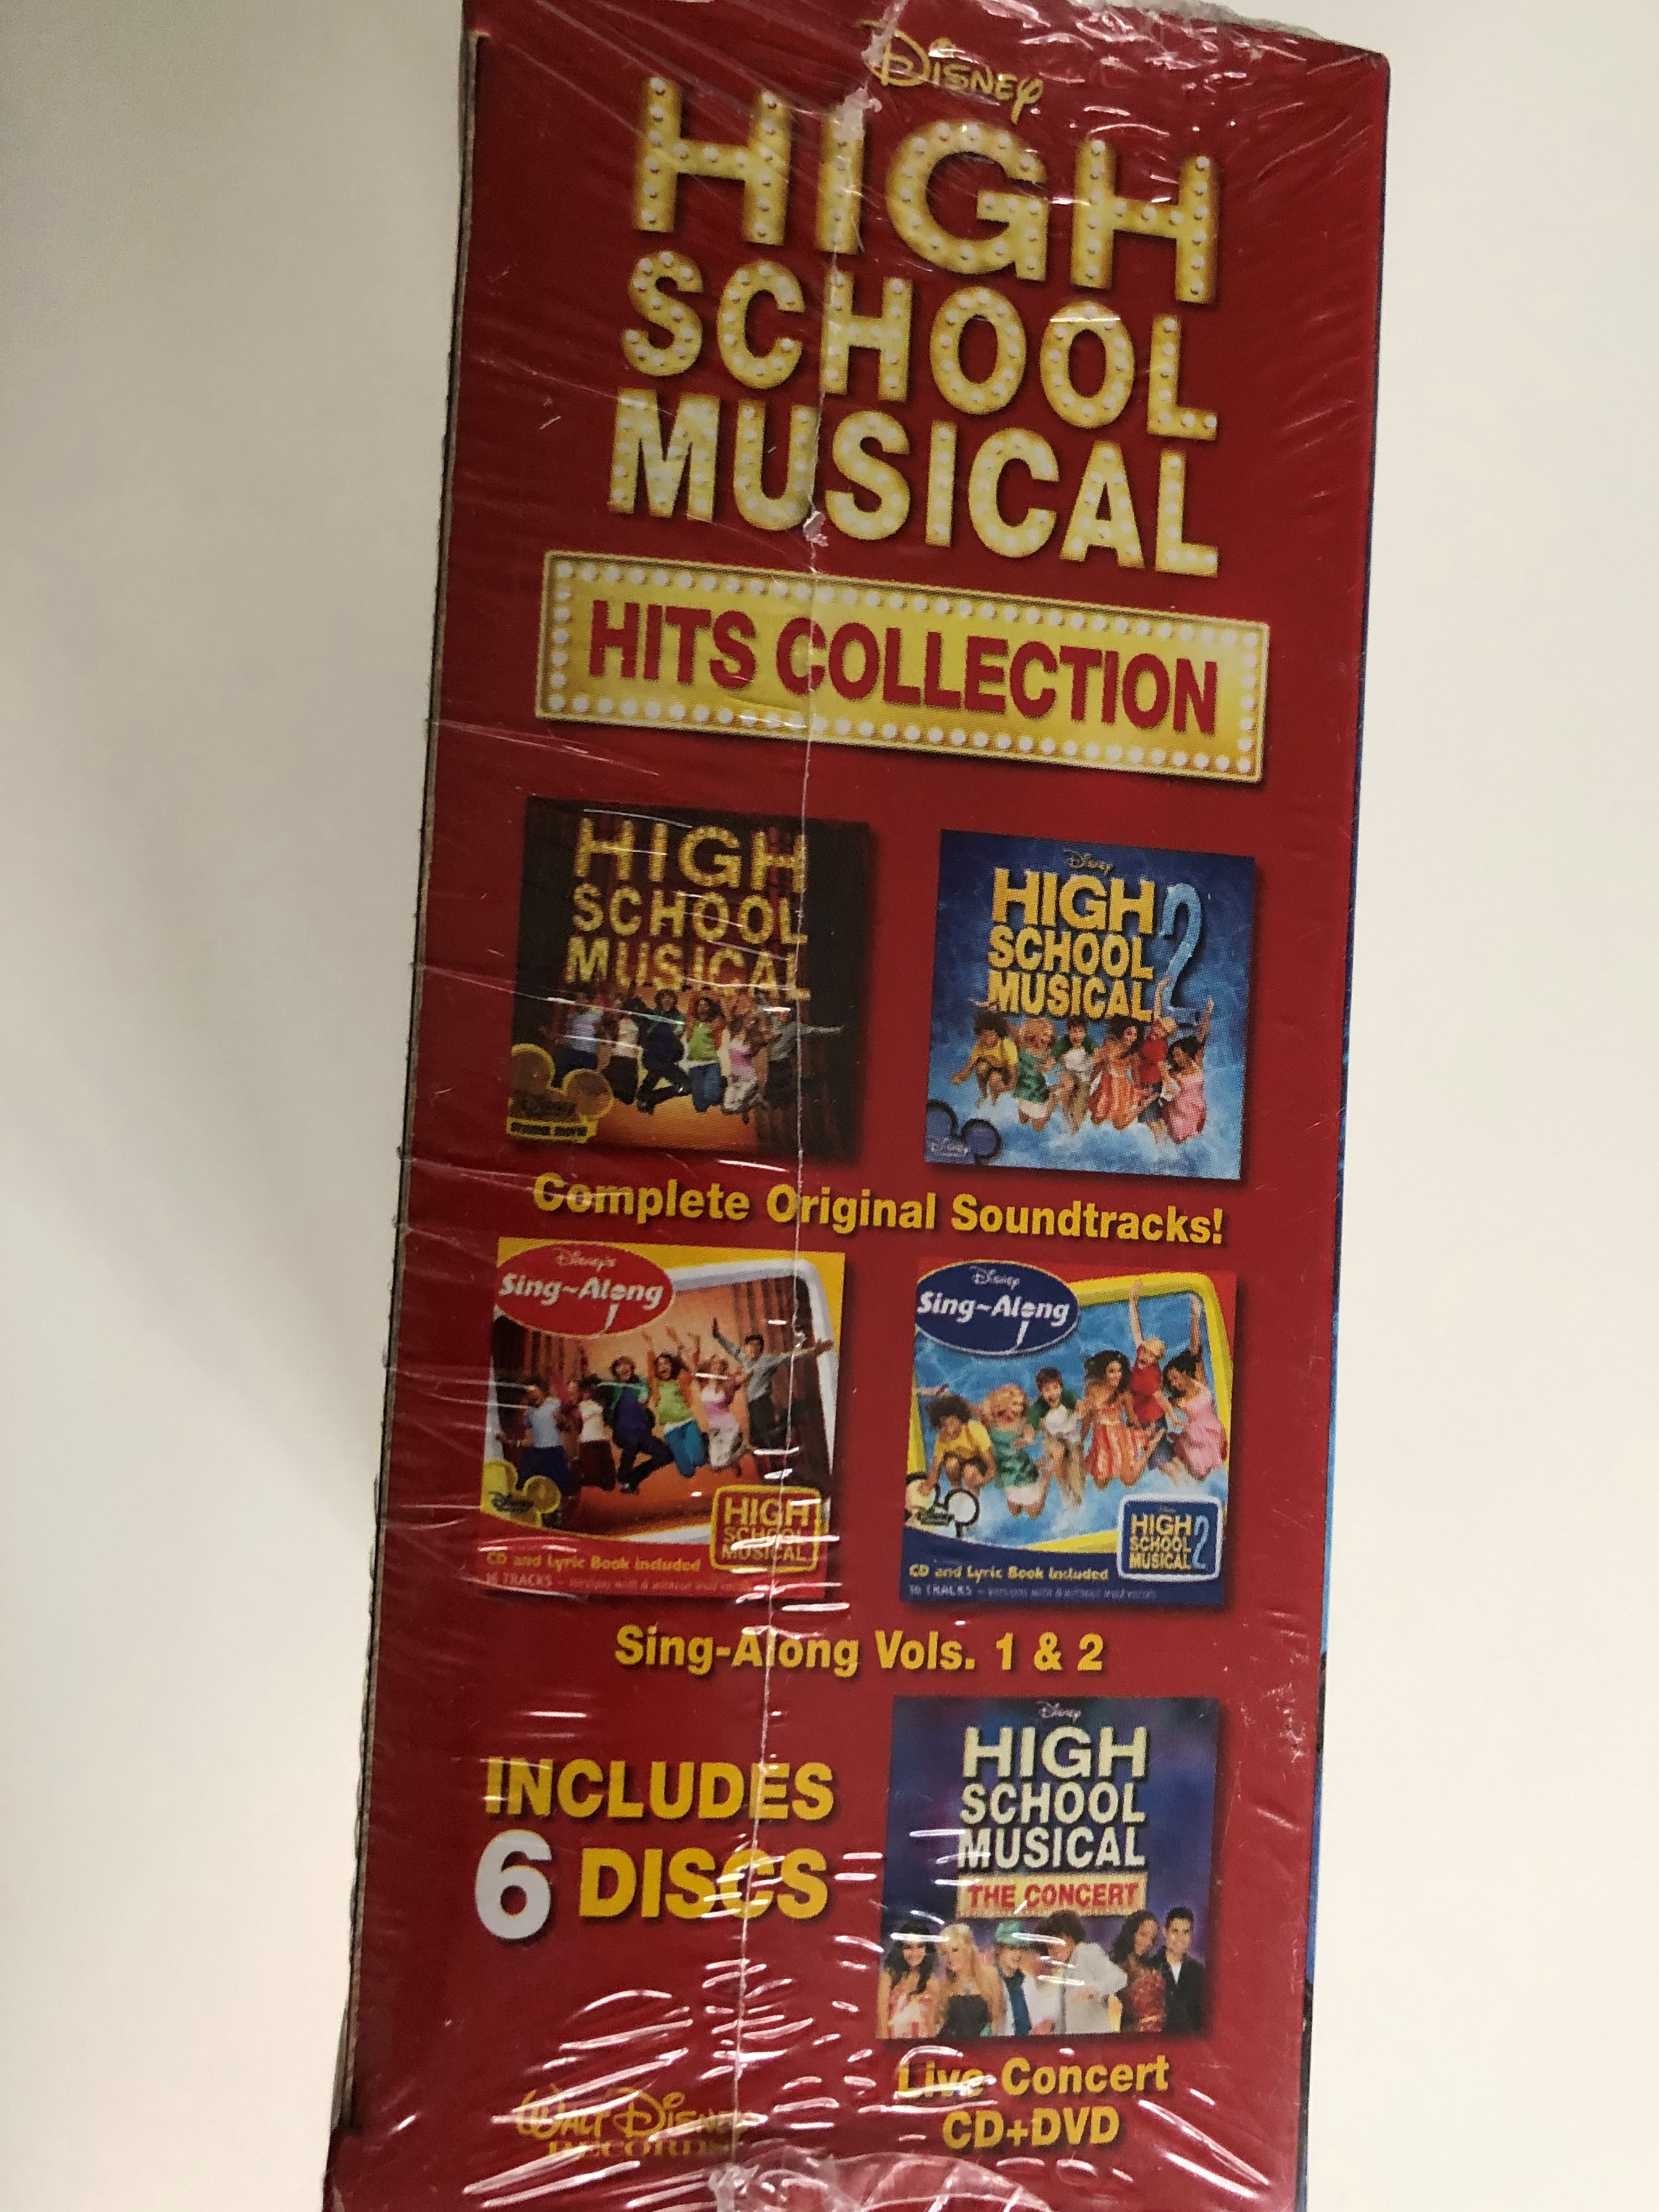 high-school-musical-2-hits-collection-disney-channel-walt-disney-records-box-set-5x-audio-cd-2007-5099951483326-4-.jpg